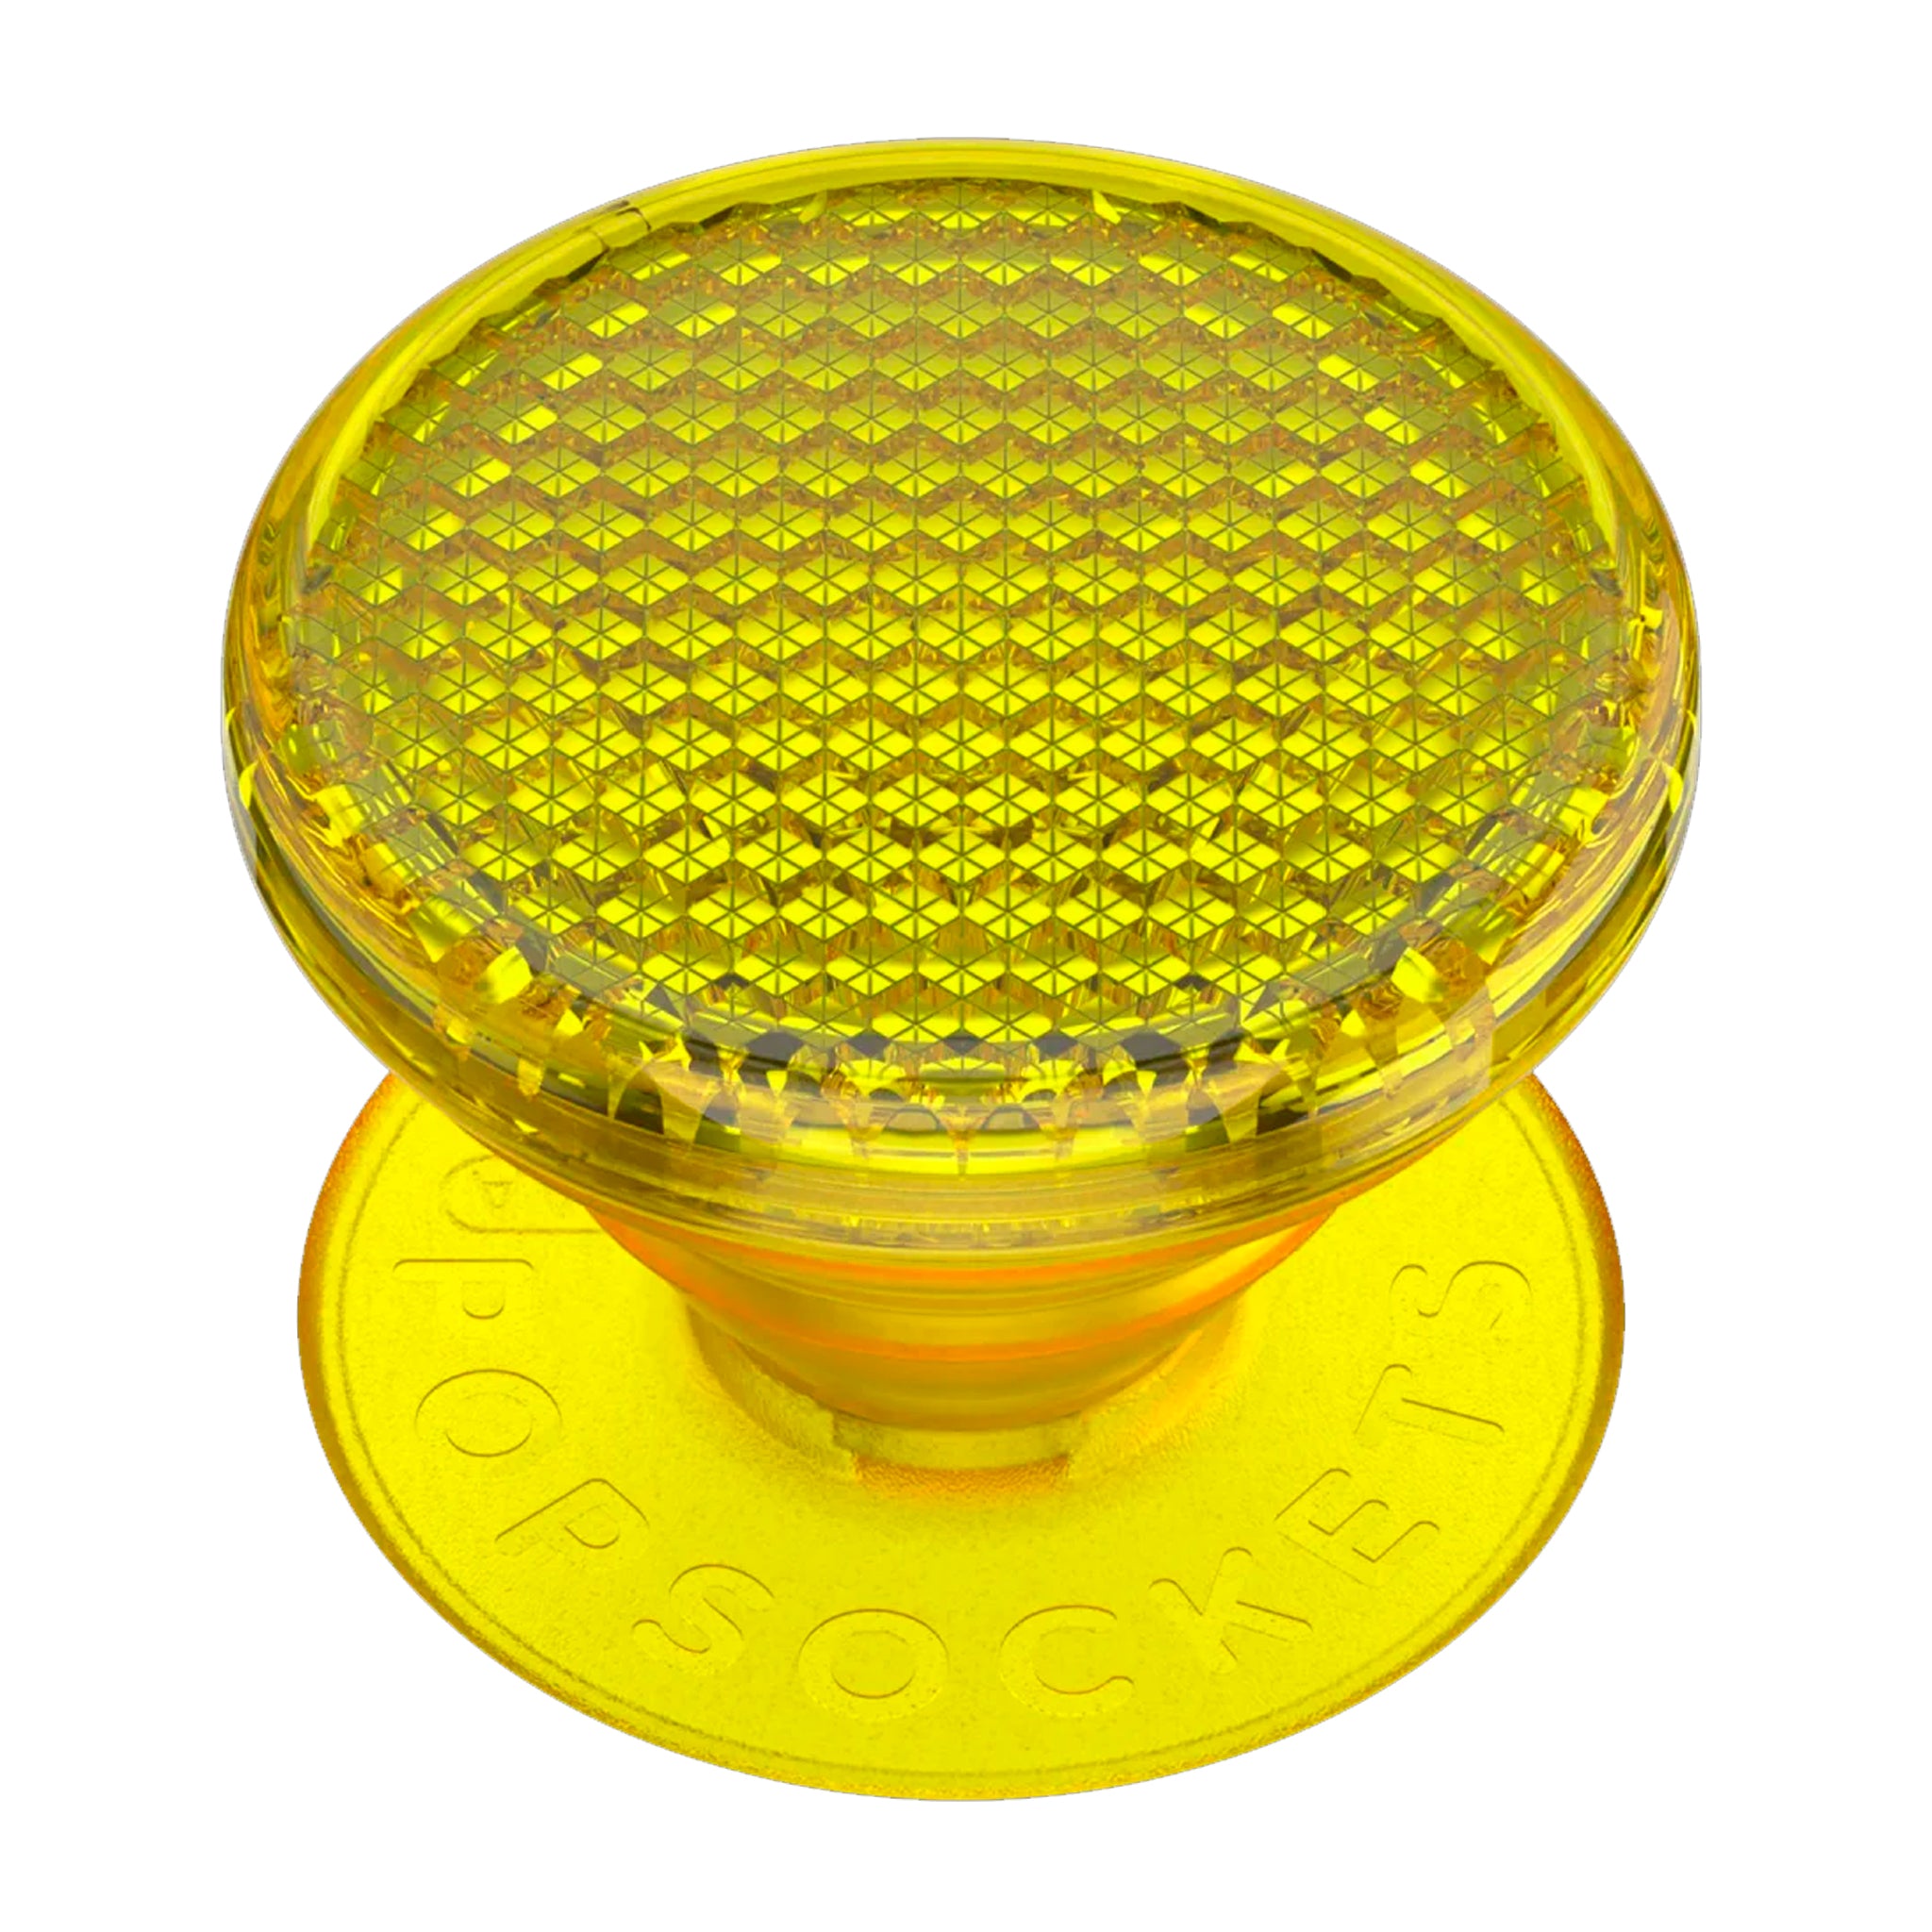 Popsockets - Popgrip - Reflective Caution Yellow Translucent